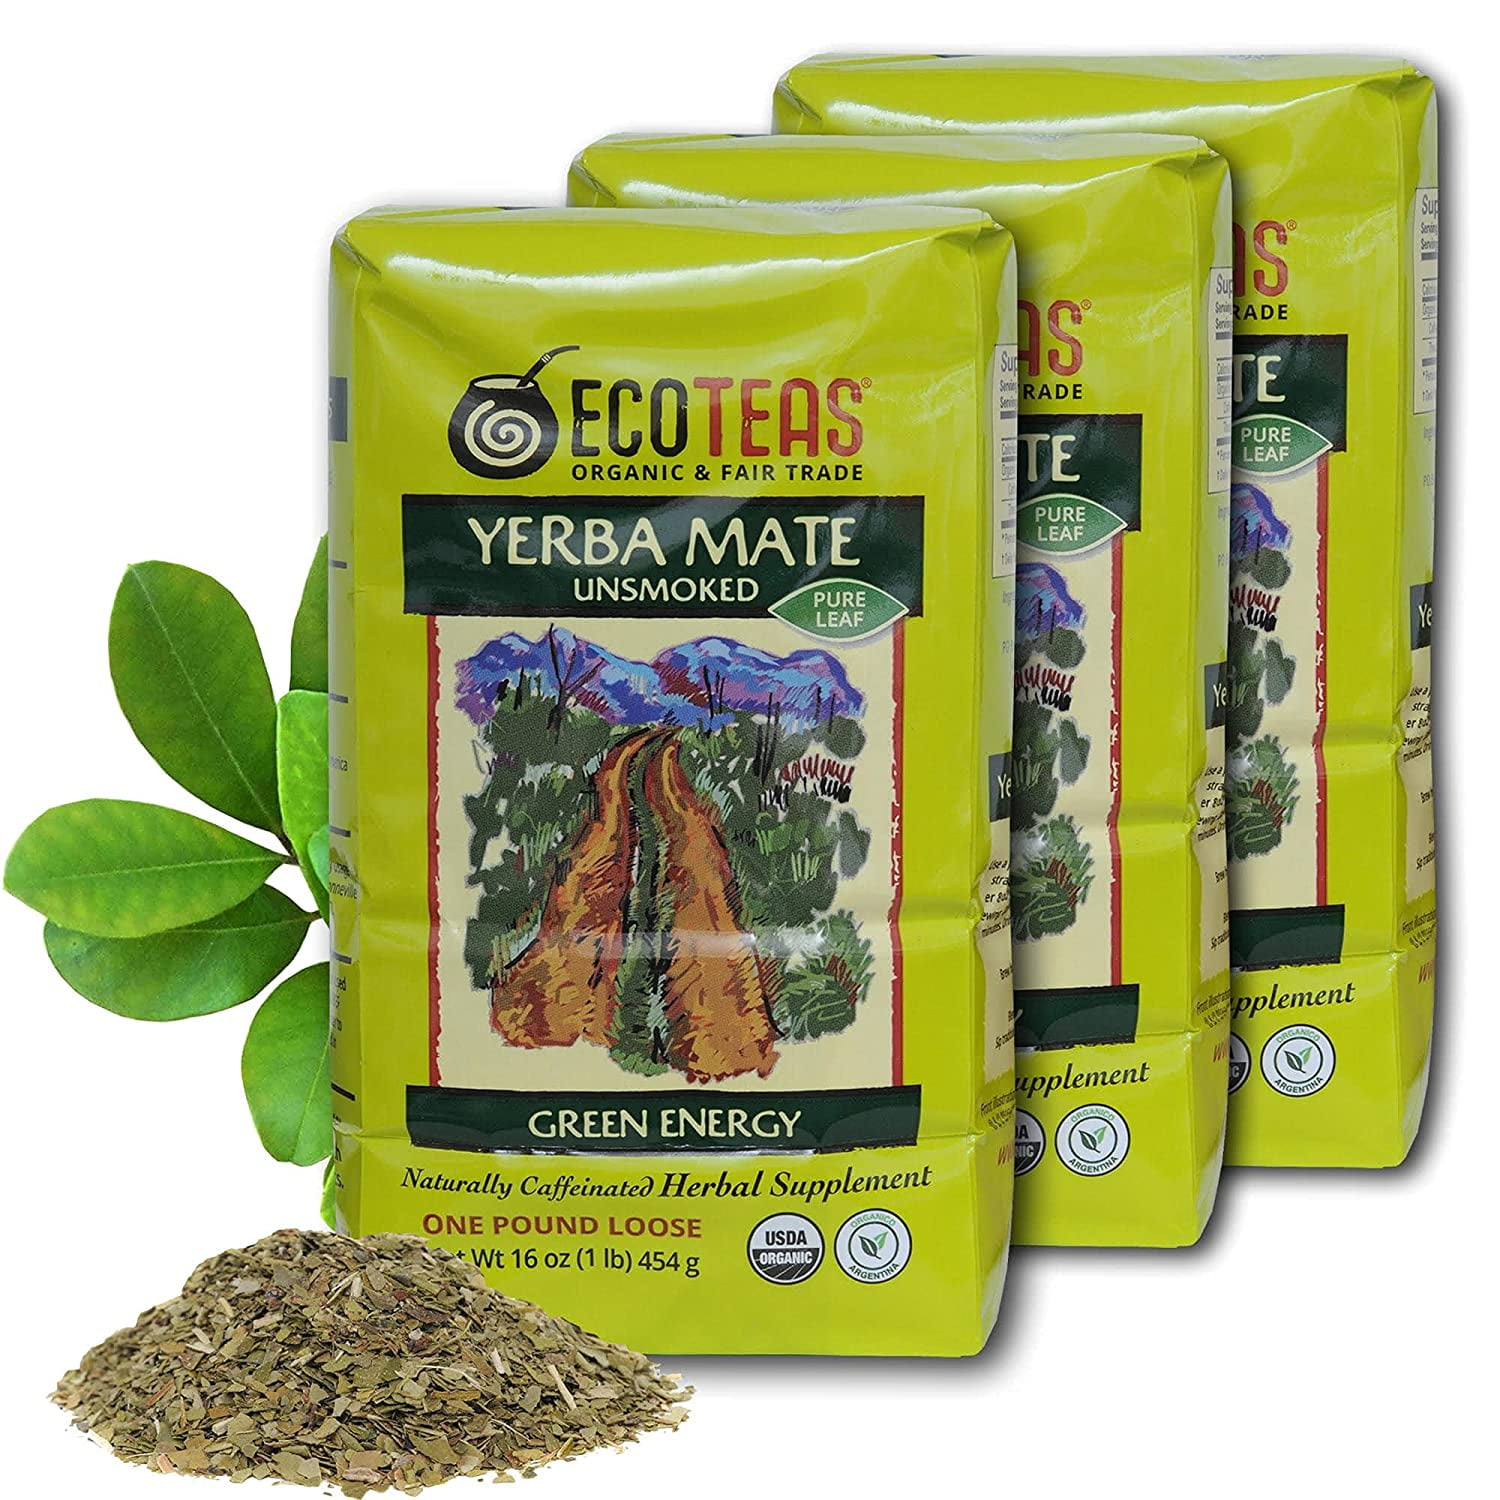 ORIGEENS ORGANIC YERBA MATE 1Kg, Yerba Mate Tea unsmoked Leaf without  stems not powdery